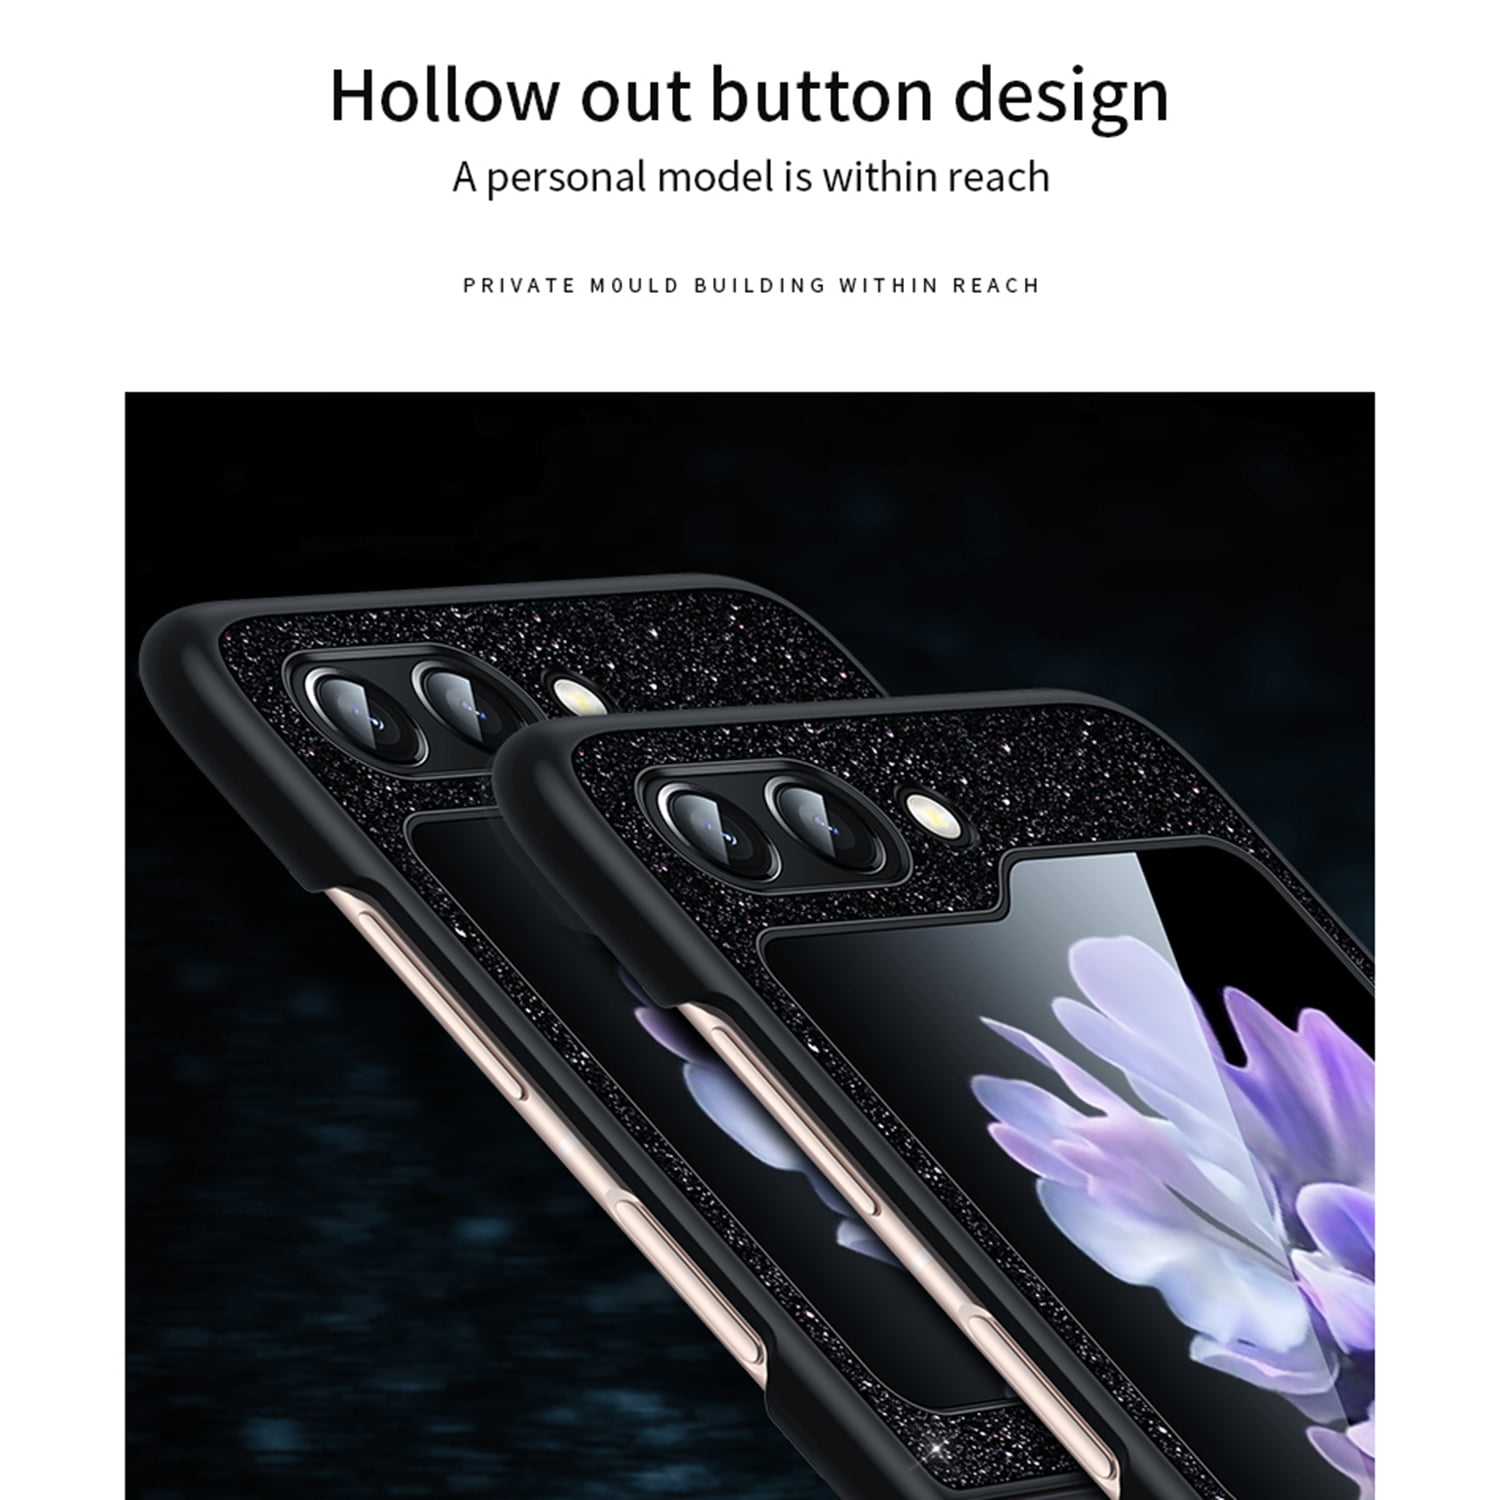 Luxury Designer Case – Z Flip 5 – Dealonation